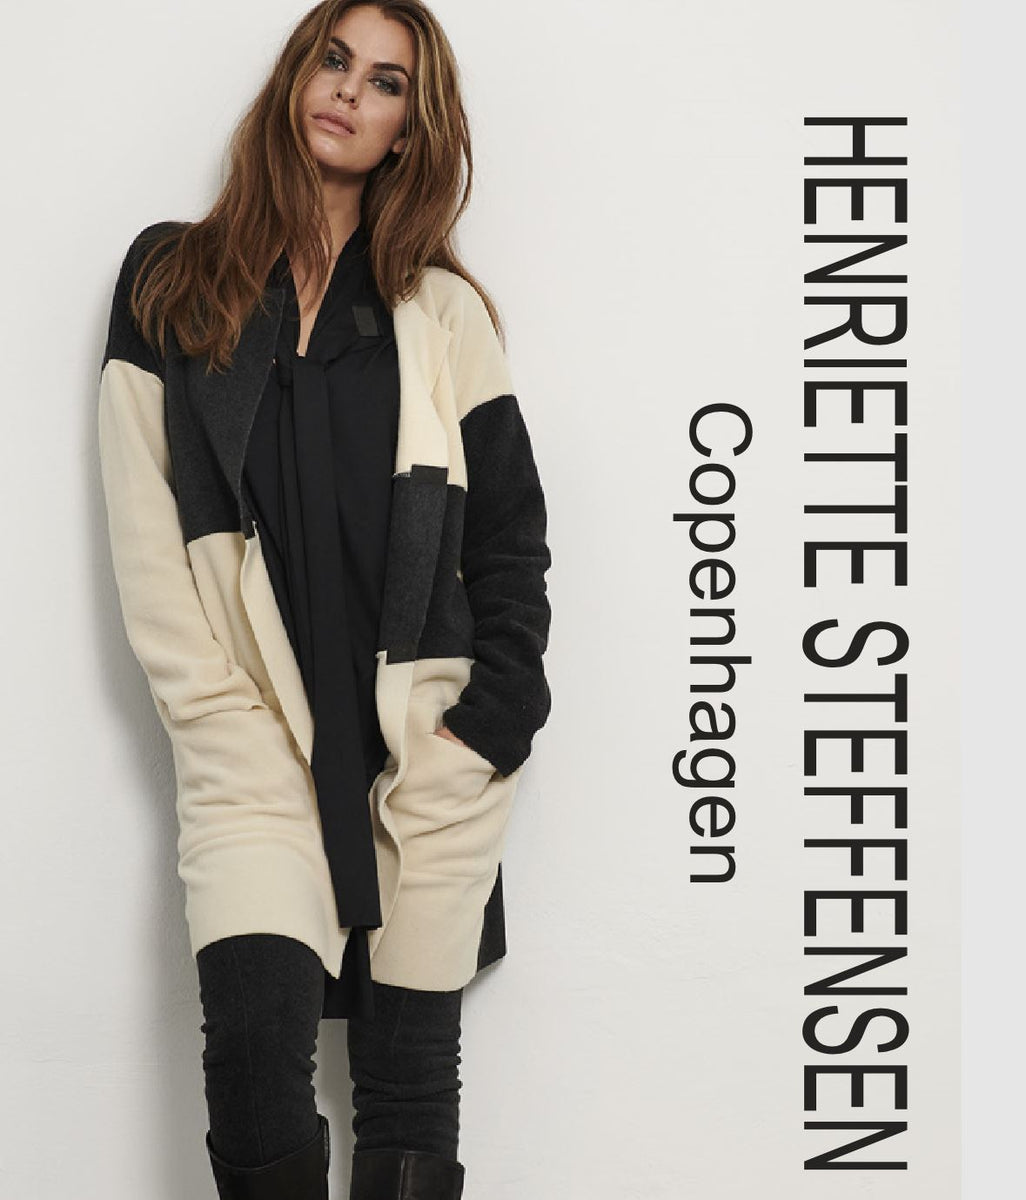 Henriette Steffensen Copenhagen - Official Online shop